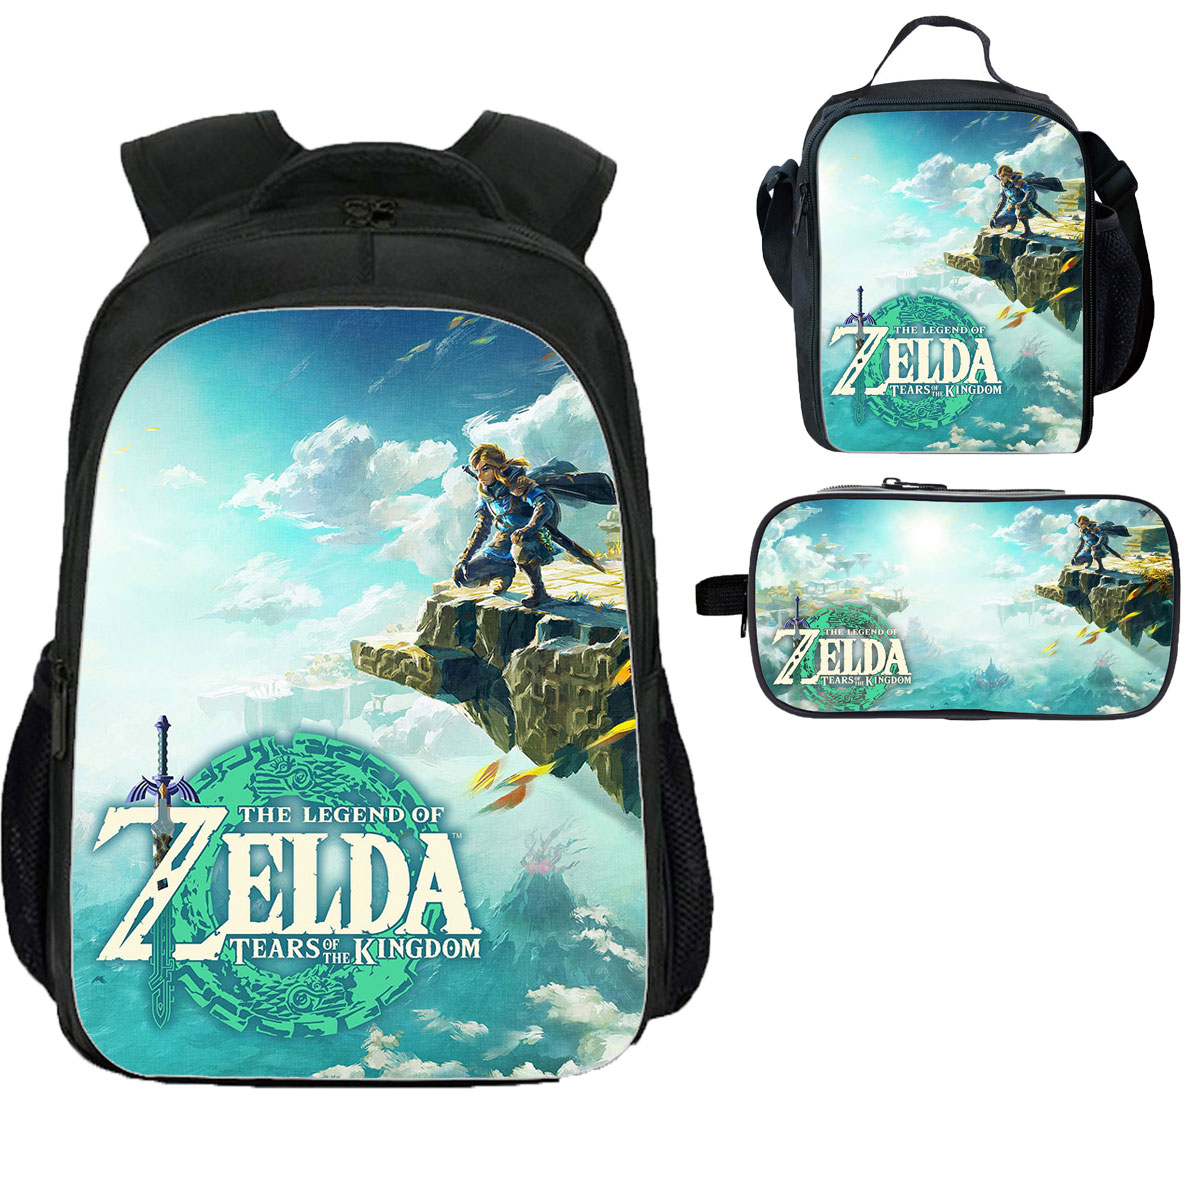 The Legend of Zelda School Backpack Lunch Bag Pencil Case 3 Pieces 